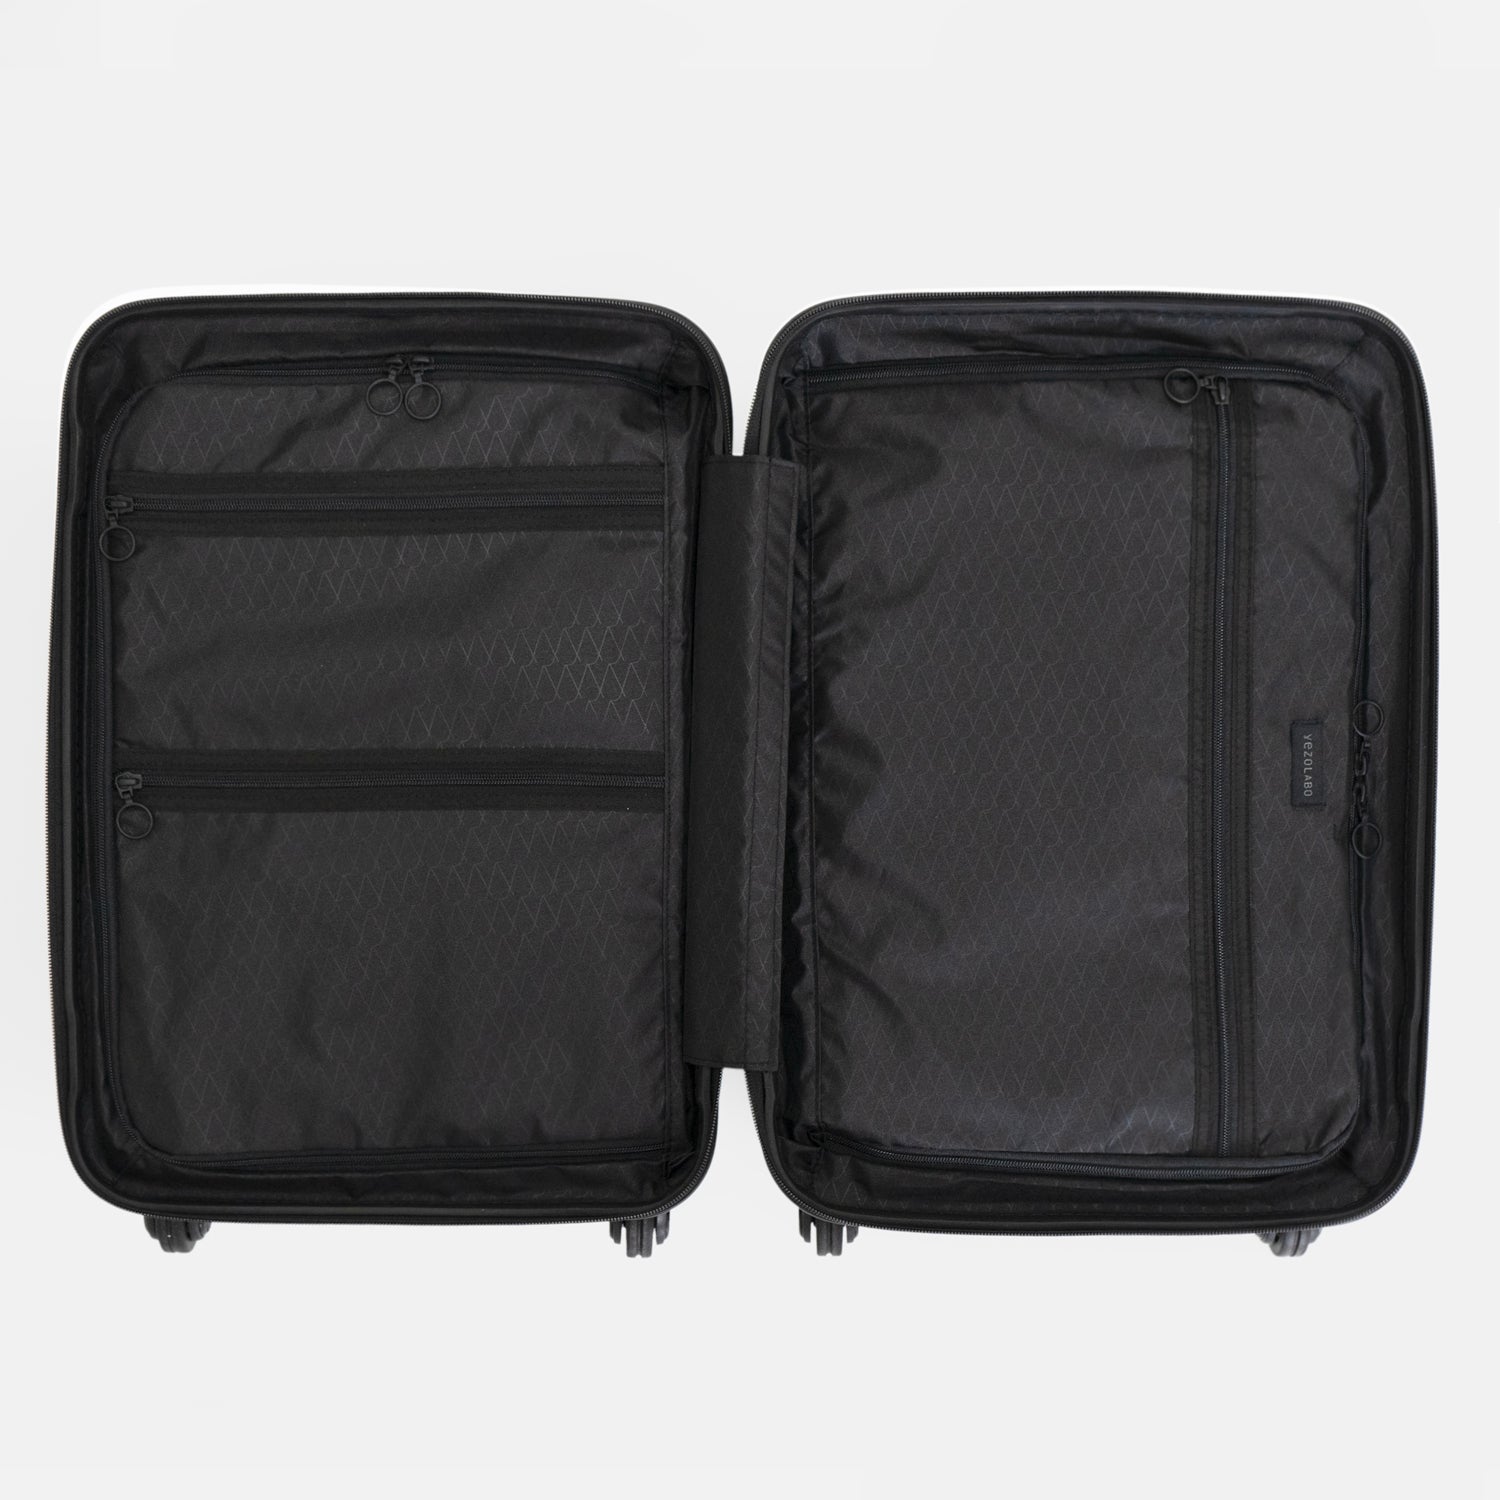 Trunkレザーバンドハードスーツケースの内装には両側に荷物を収納するファスナー仕切りとファスナーポケットを配置しています。本体ボトム側には、縦に渡る広いファスナーポケットを、トップ側には横に渡るファスナーポケットを2つ配置。細かい荷物の収納に最適です。